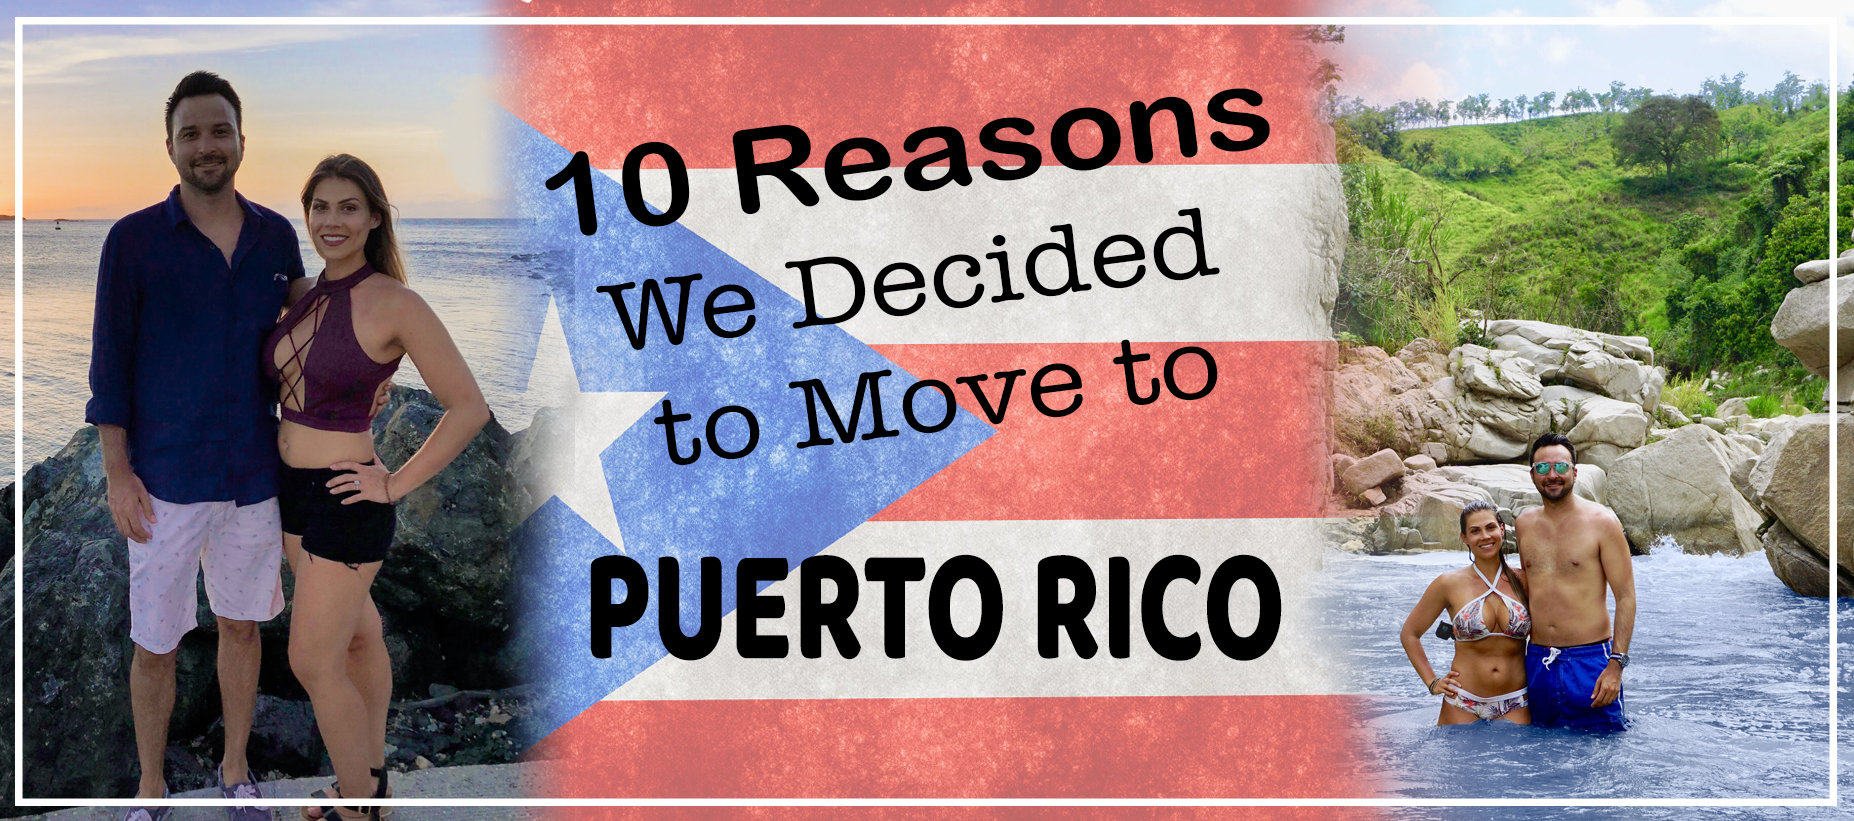 Top Reasons to Move to Puerto Rico | Post Hurricane Maria | Plentiful Travel